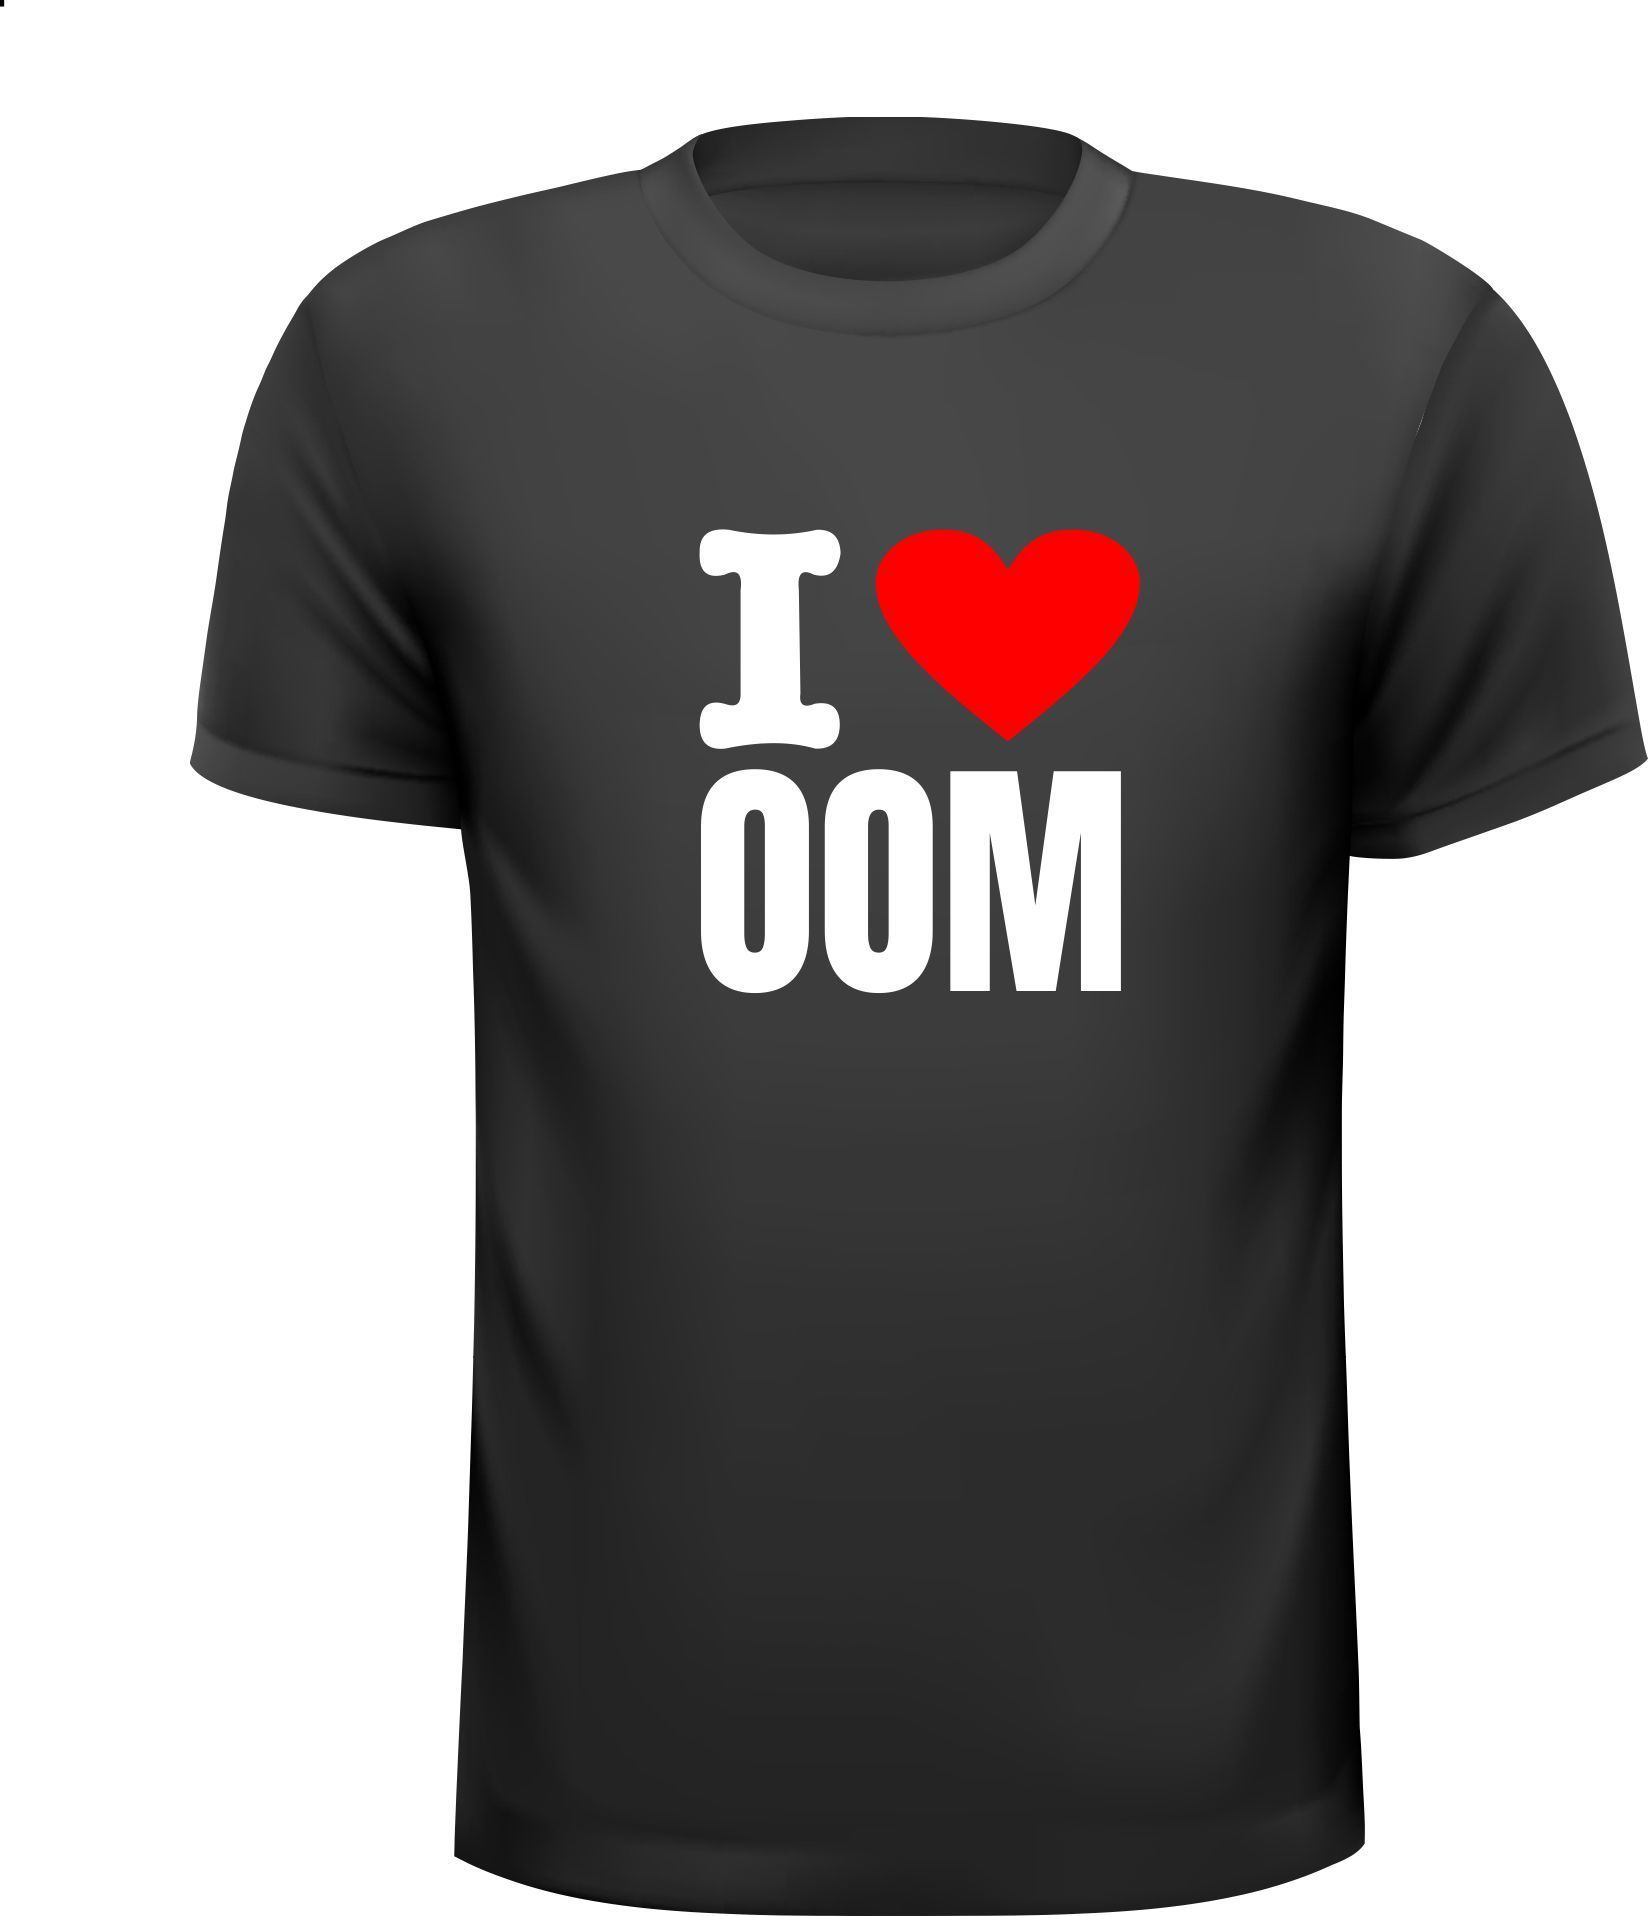 T-shirt i love oom